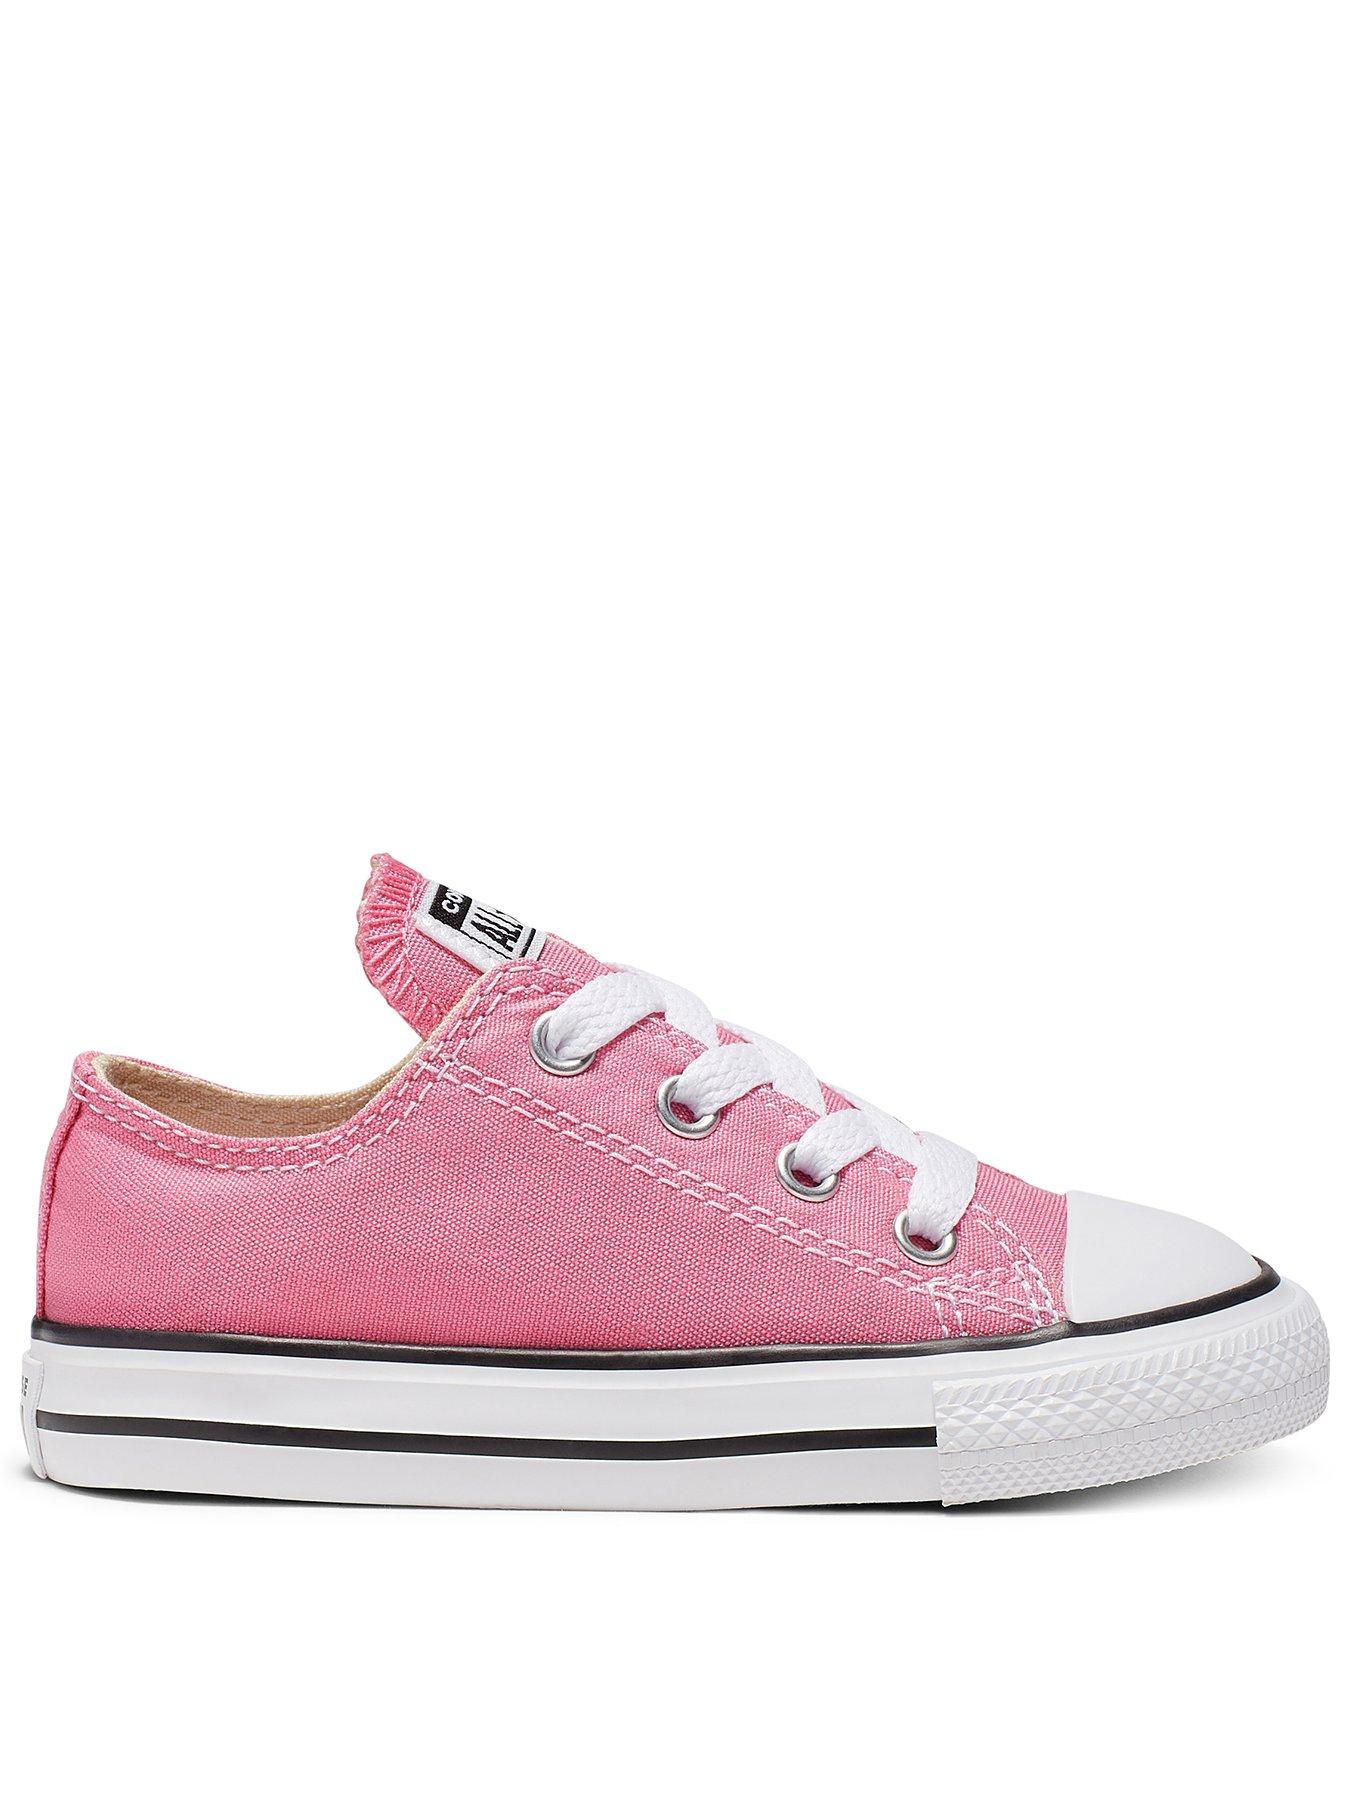 pale pink converse